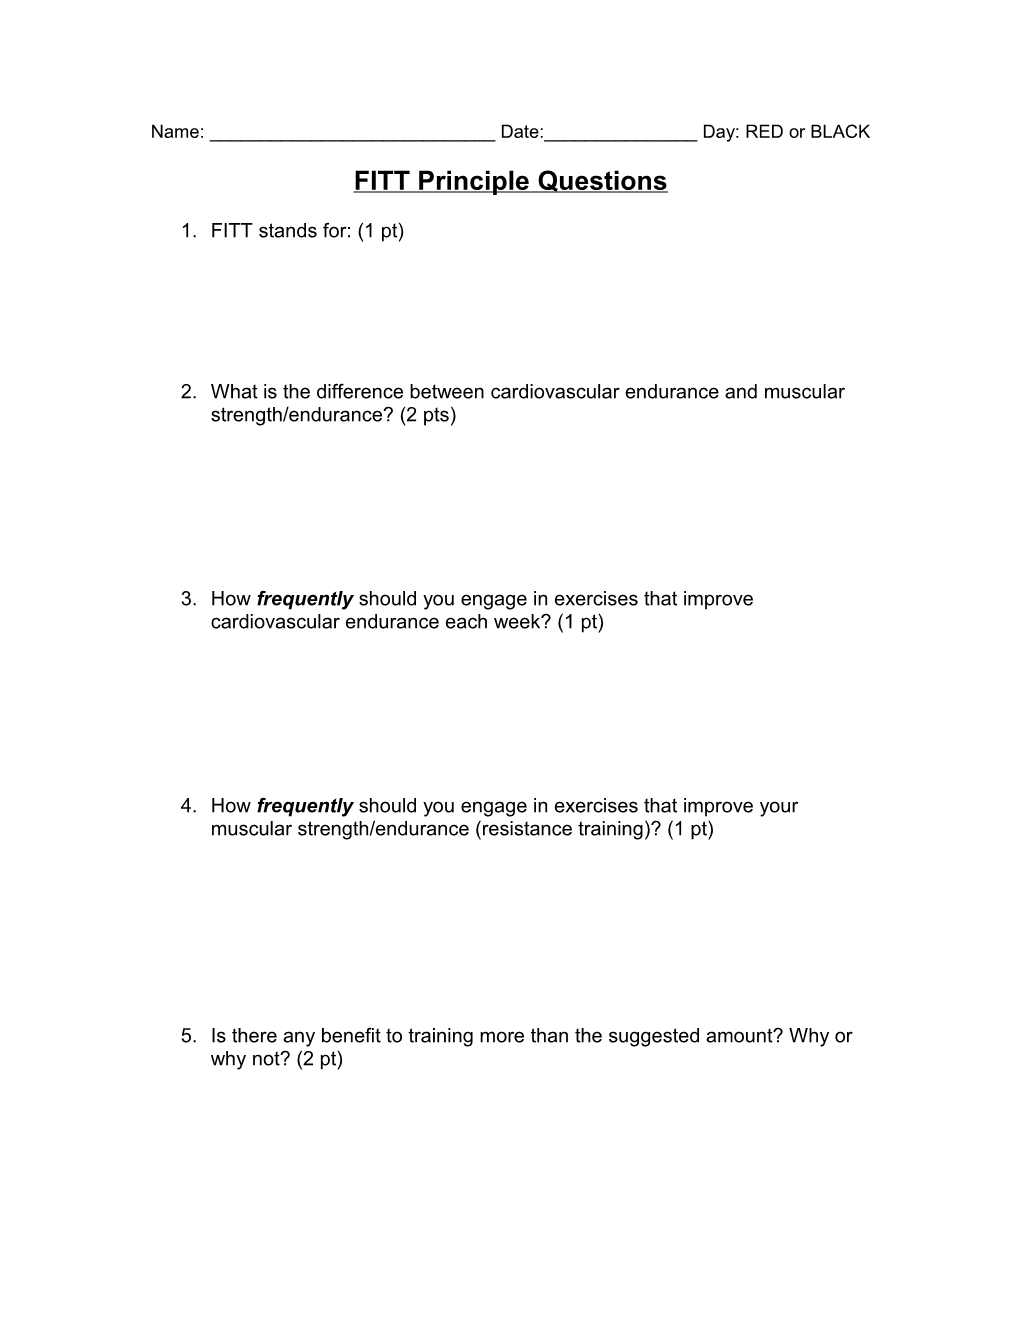 FITT Principles of Training